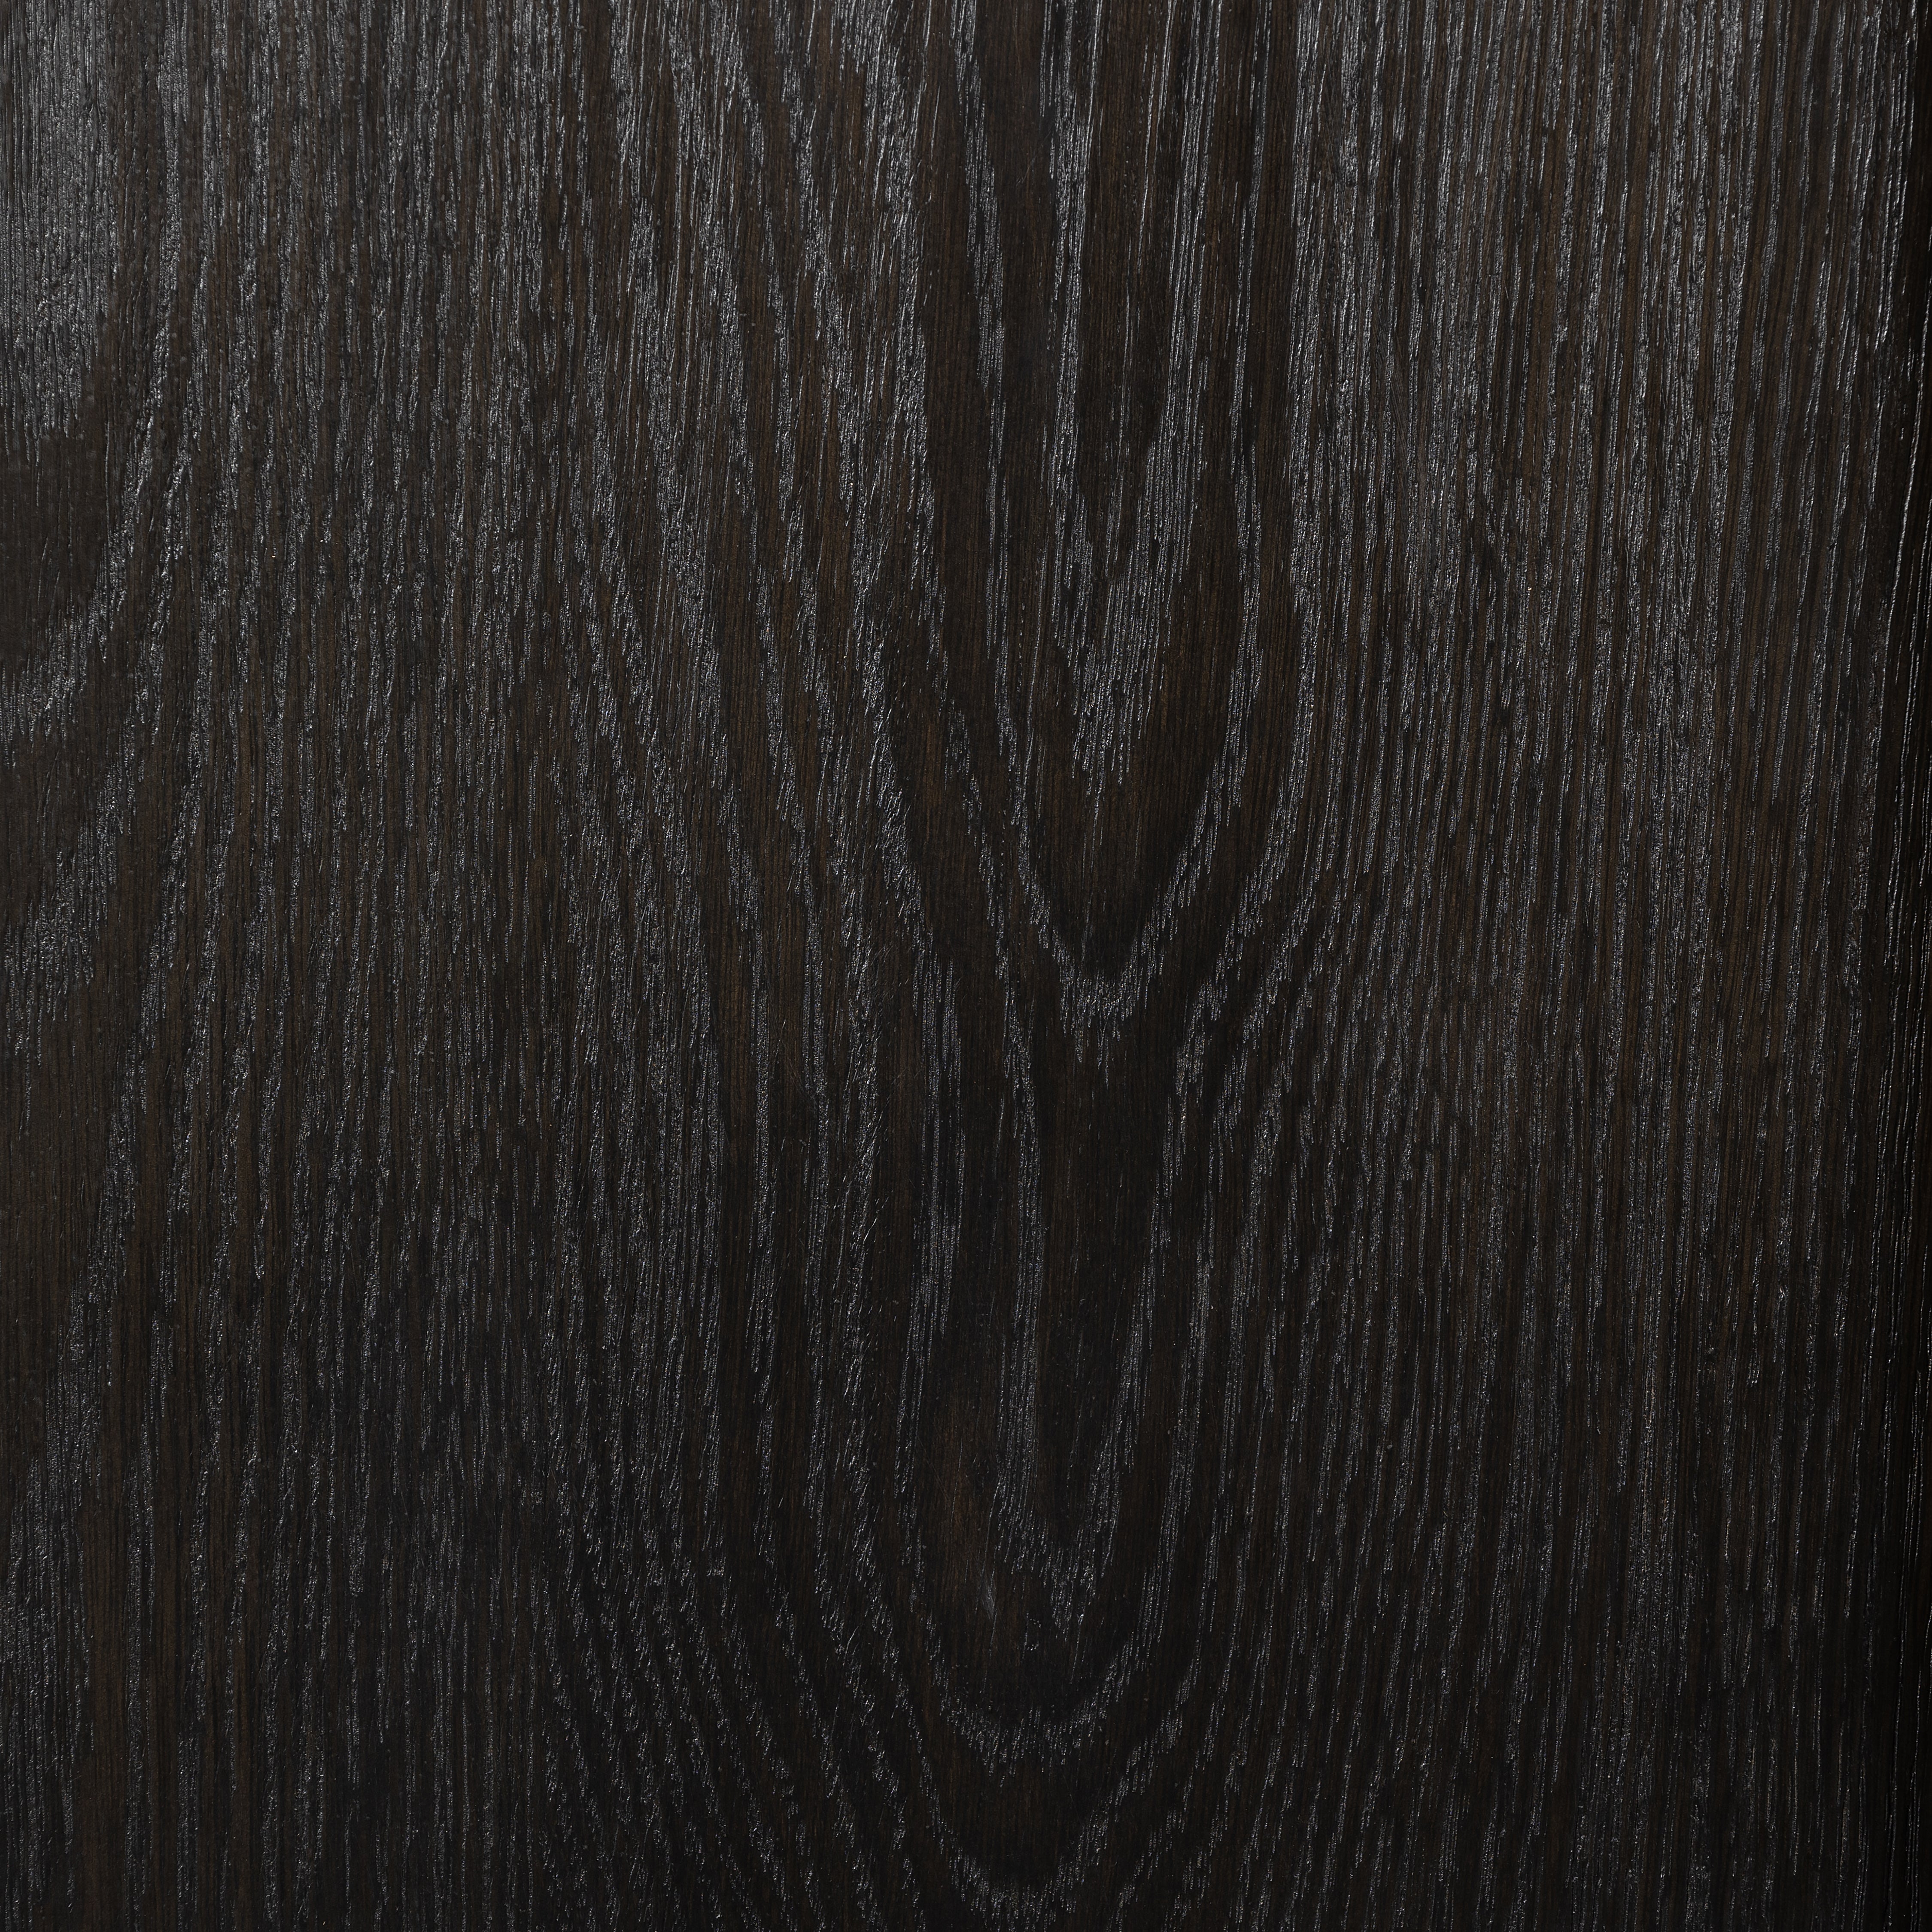 Concord Cabinet-Charcoal Oak Veneer - StyleMeGHD - 